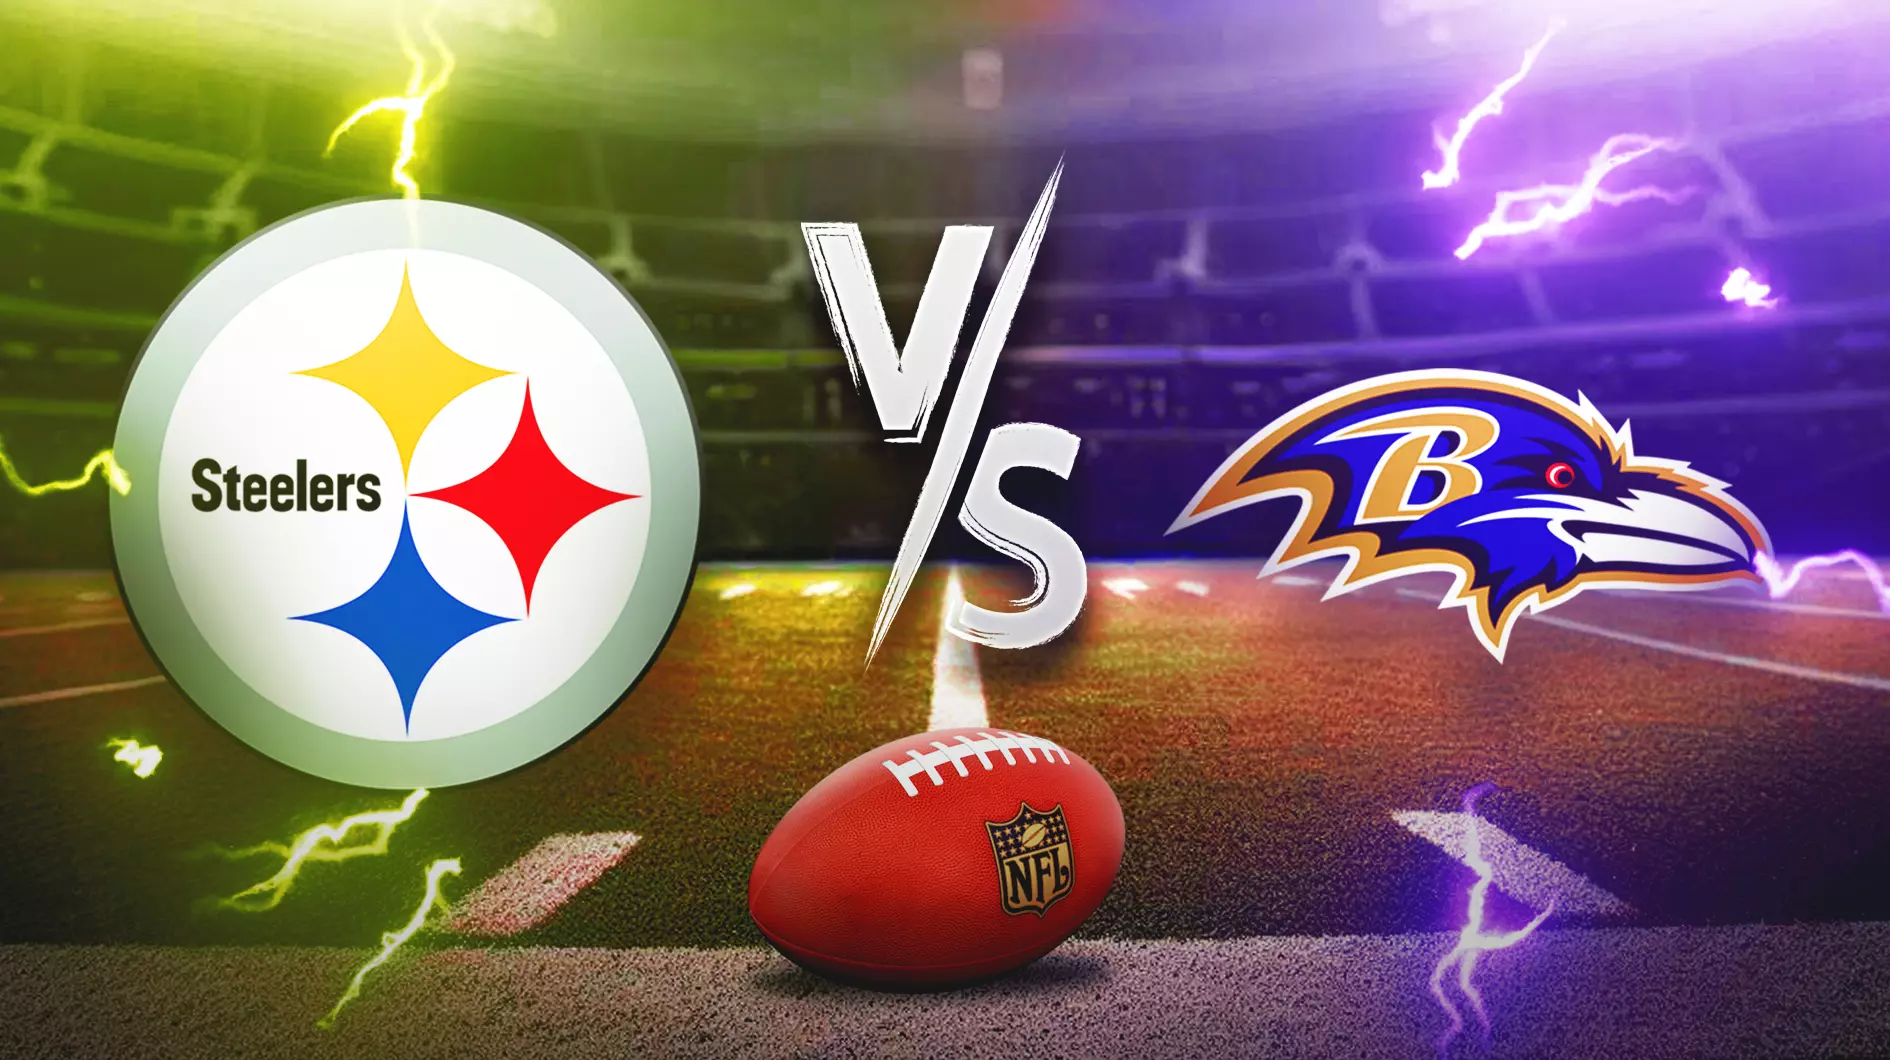 Steelers vs. Ravens prediction, odds, pick for NFL Week 18 game